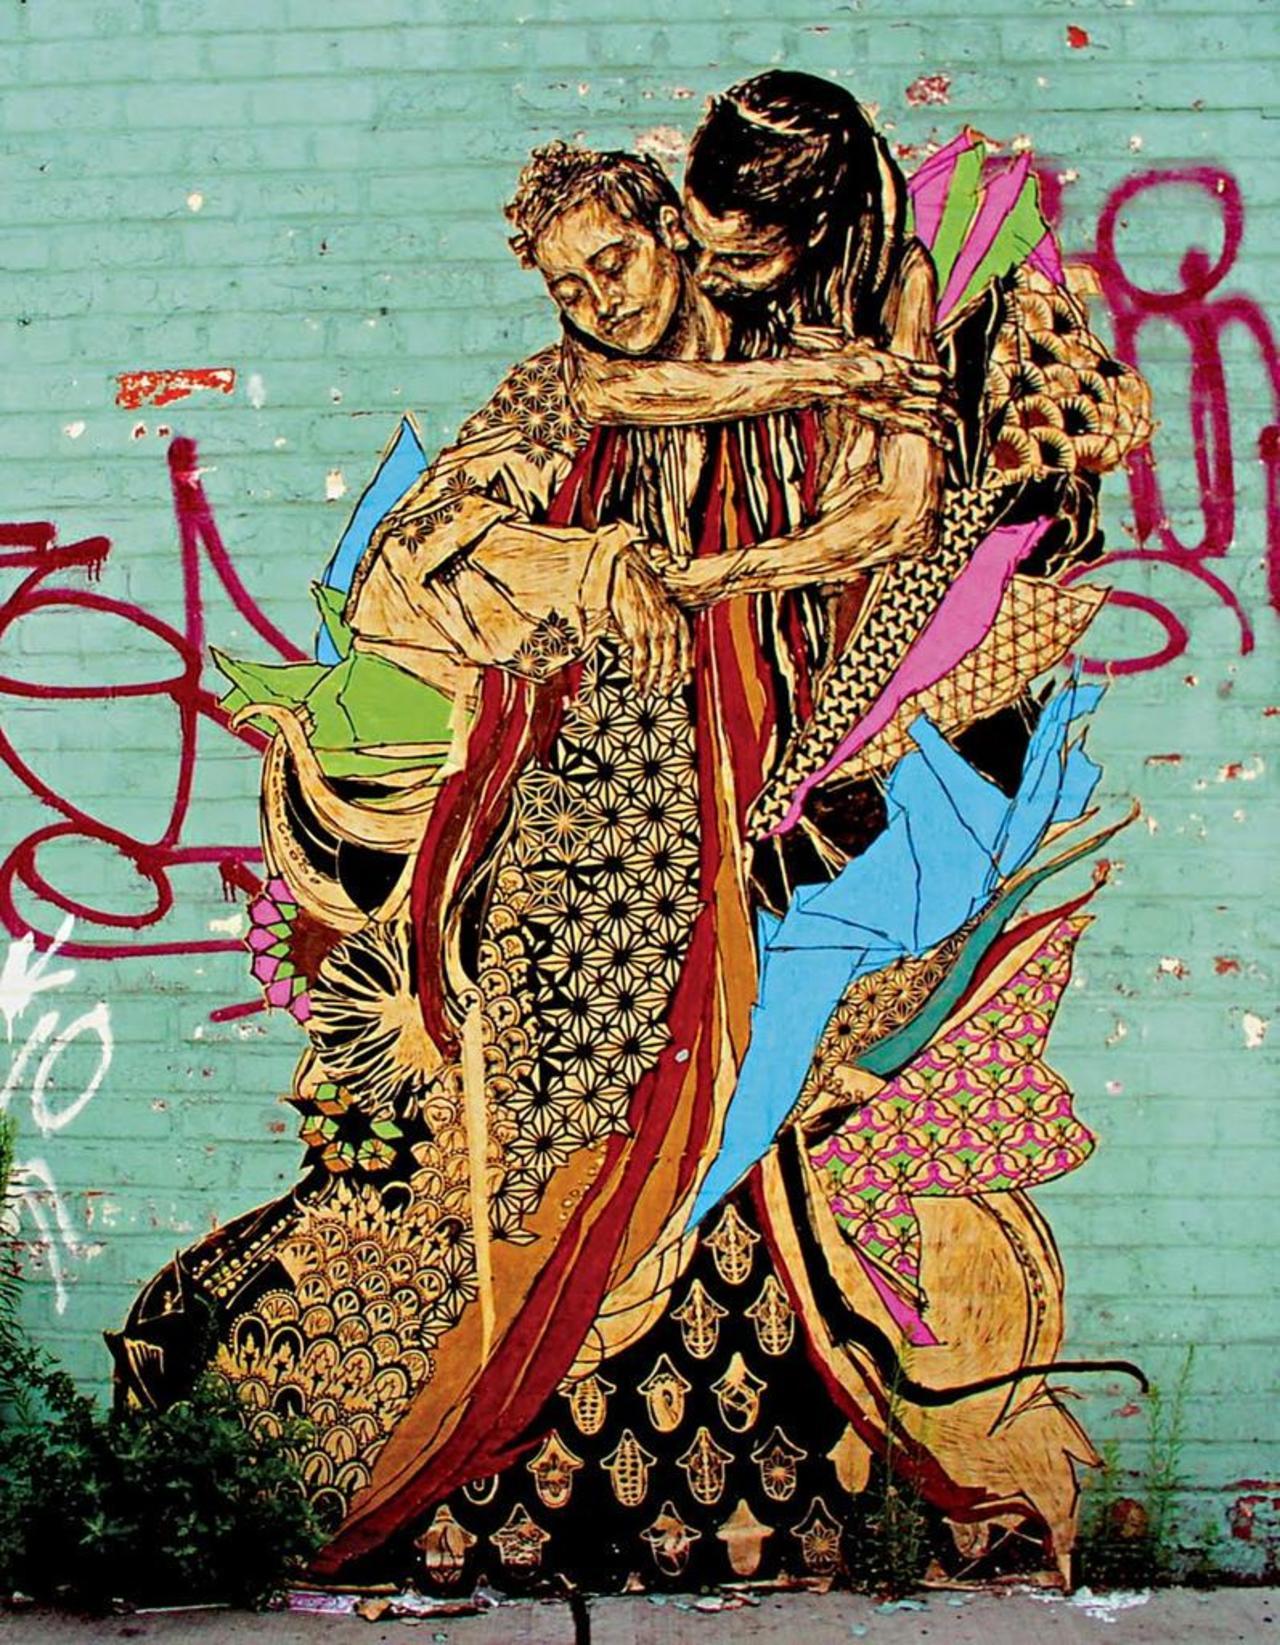 #swoon
#graffiti #painting #streetart #artmuse #گرافیتی http://t.co/JWJZyRKI4k